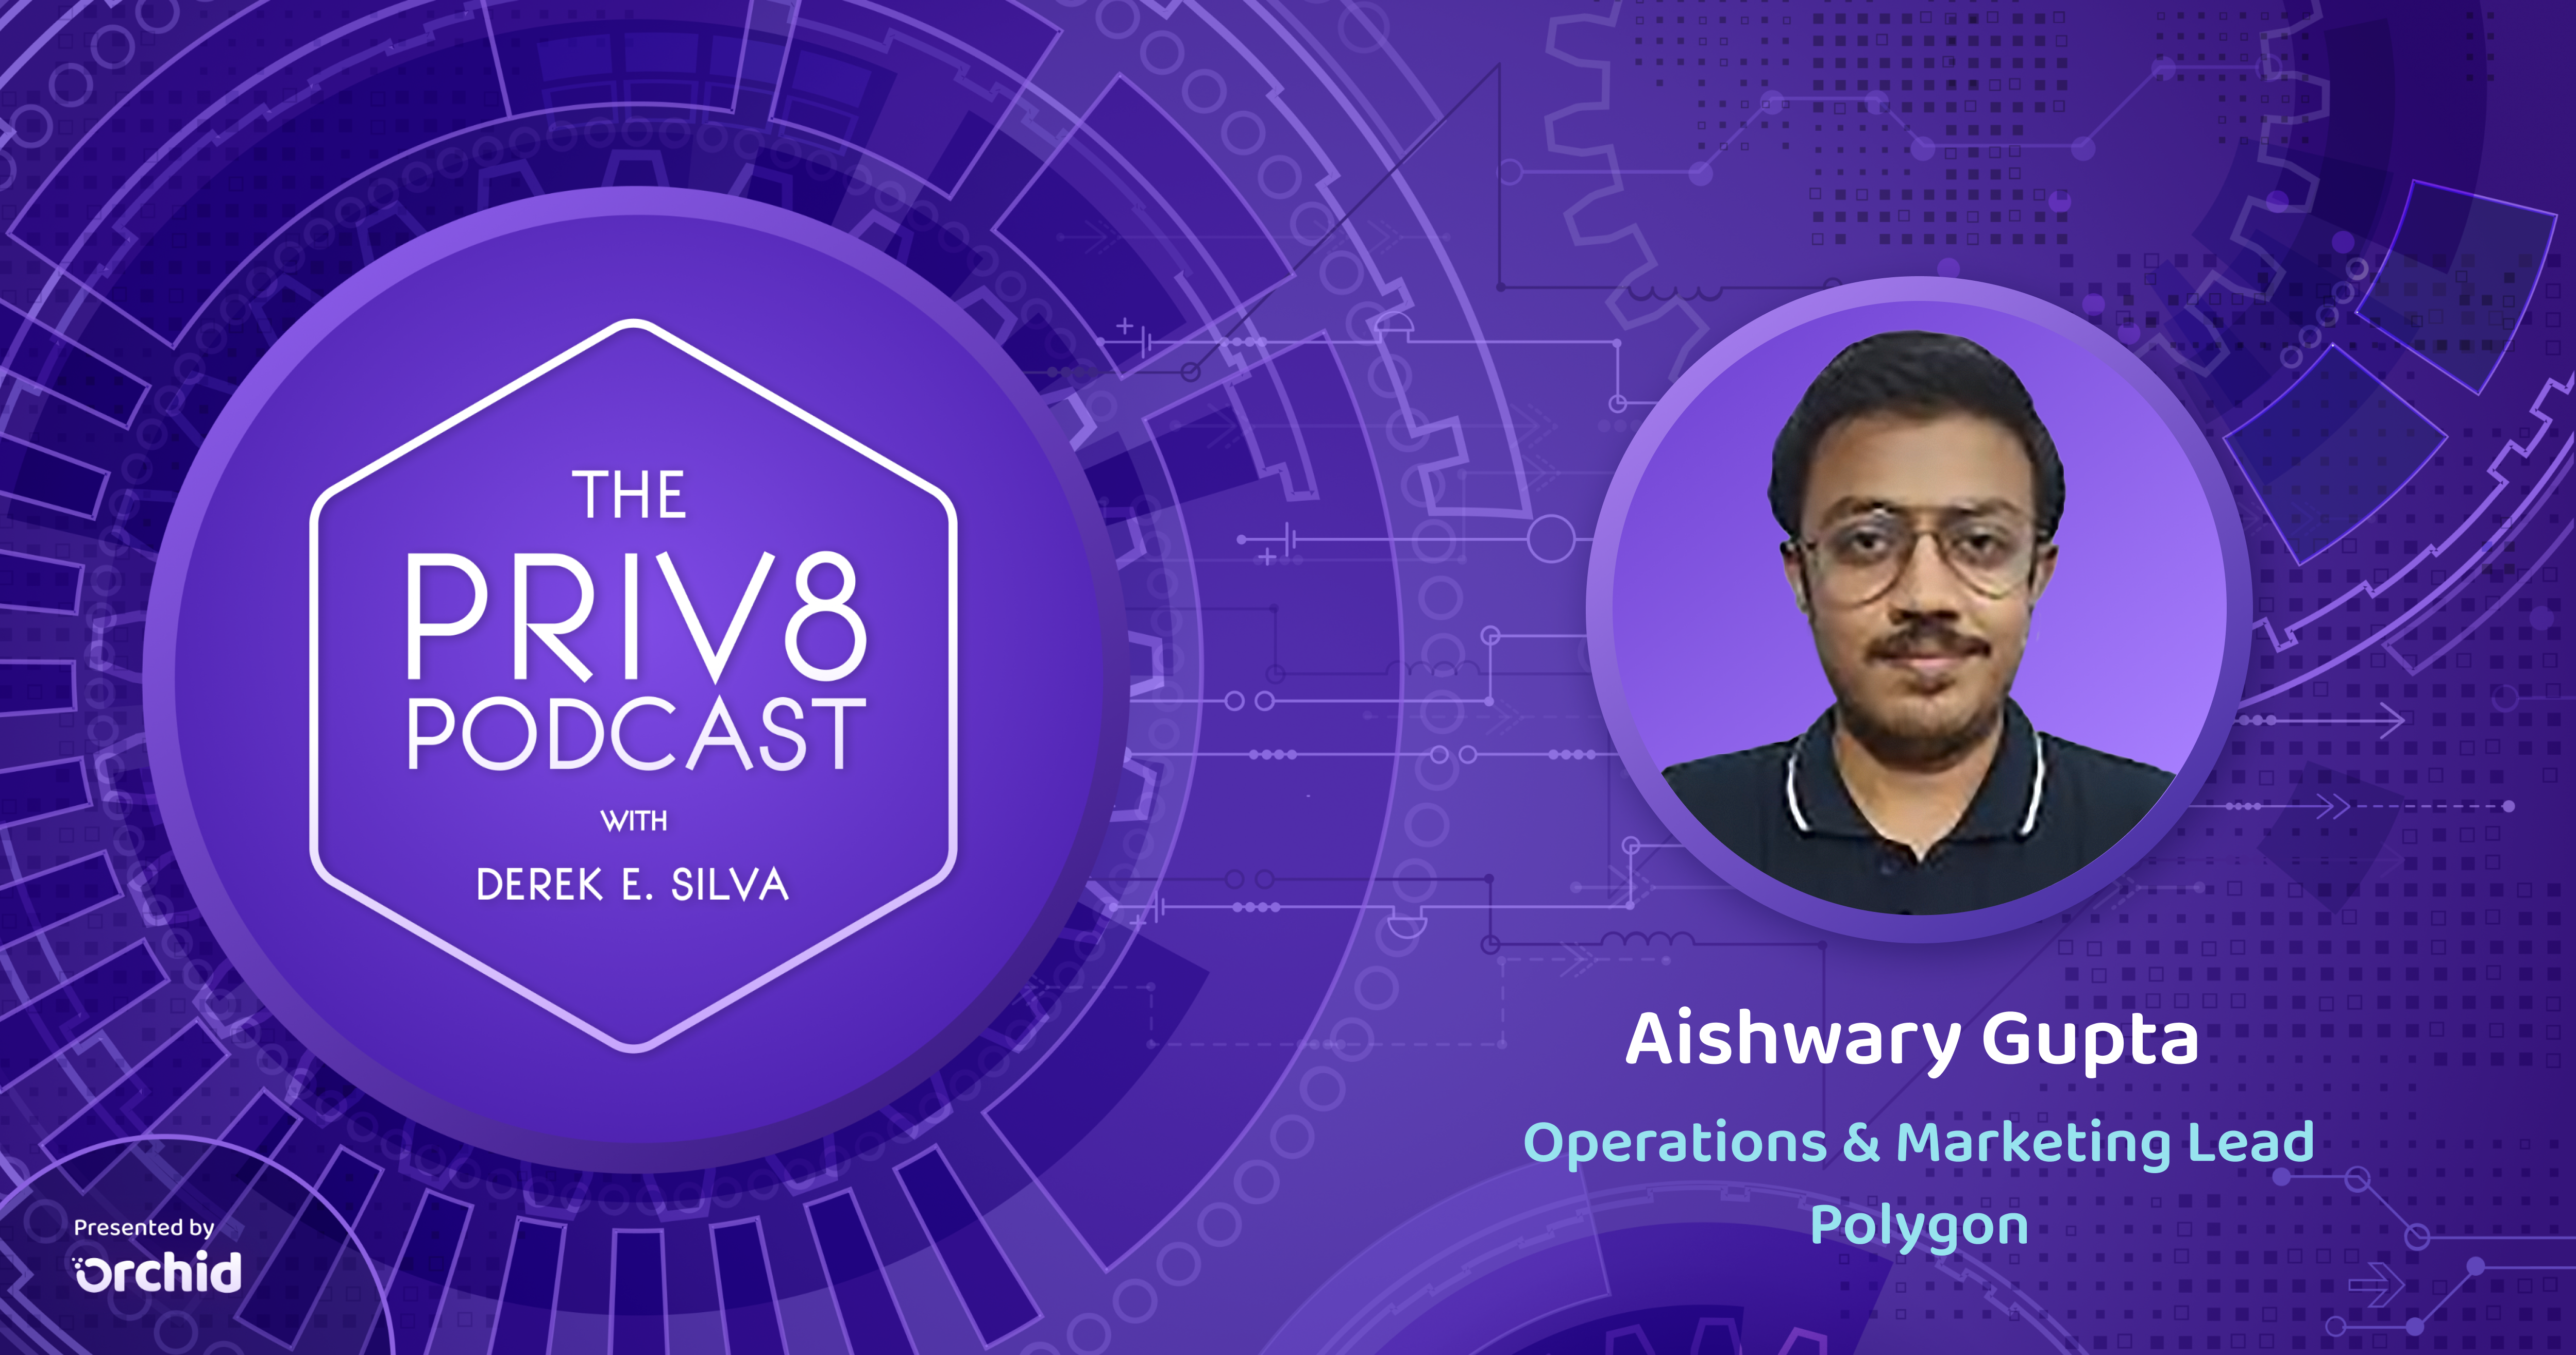 Polygon Marketing Lead Aishwary Gupta on building blockchain solutions